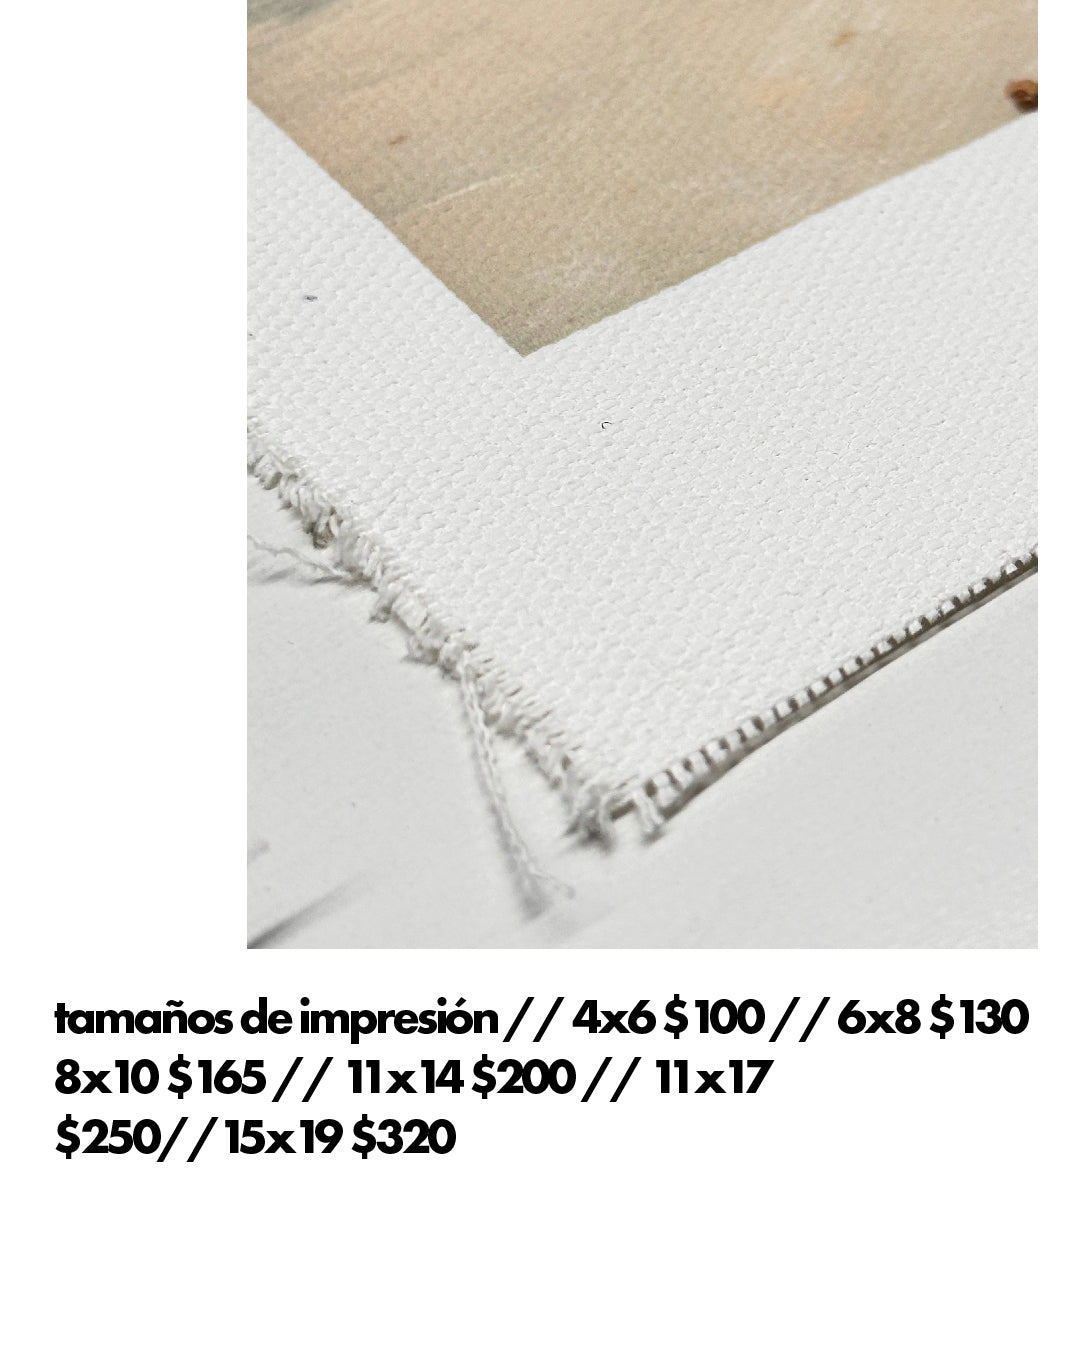 Impresión en tela tejido PANAMÁ 400g // 100% algodón